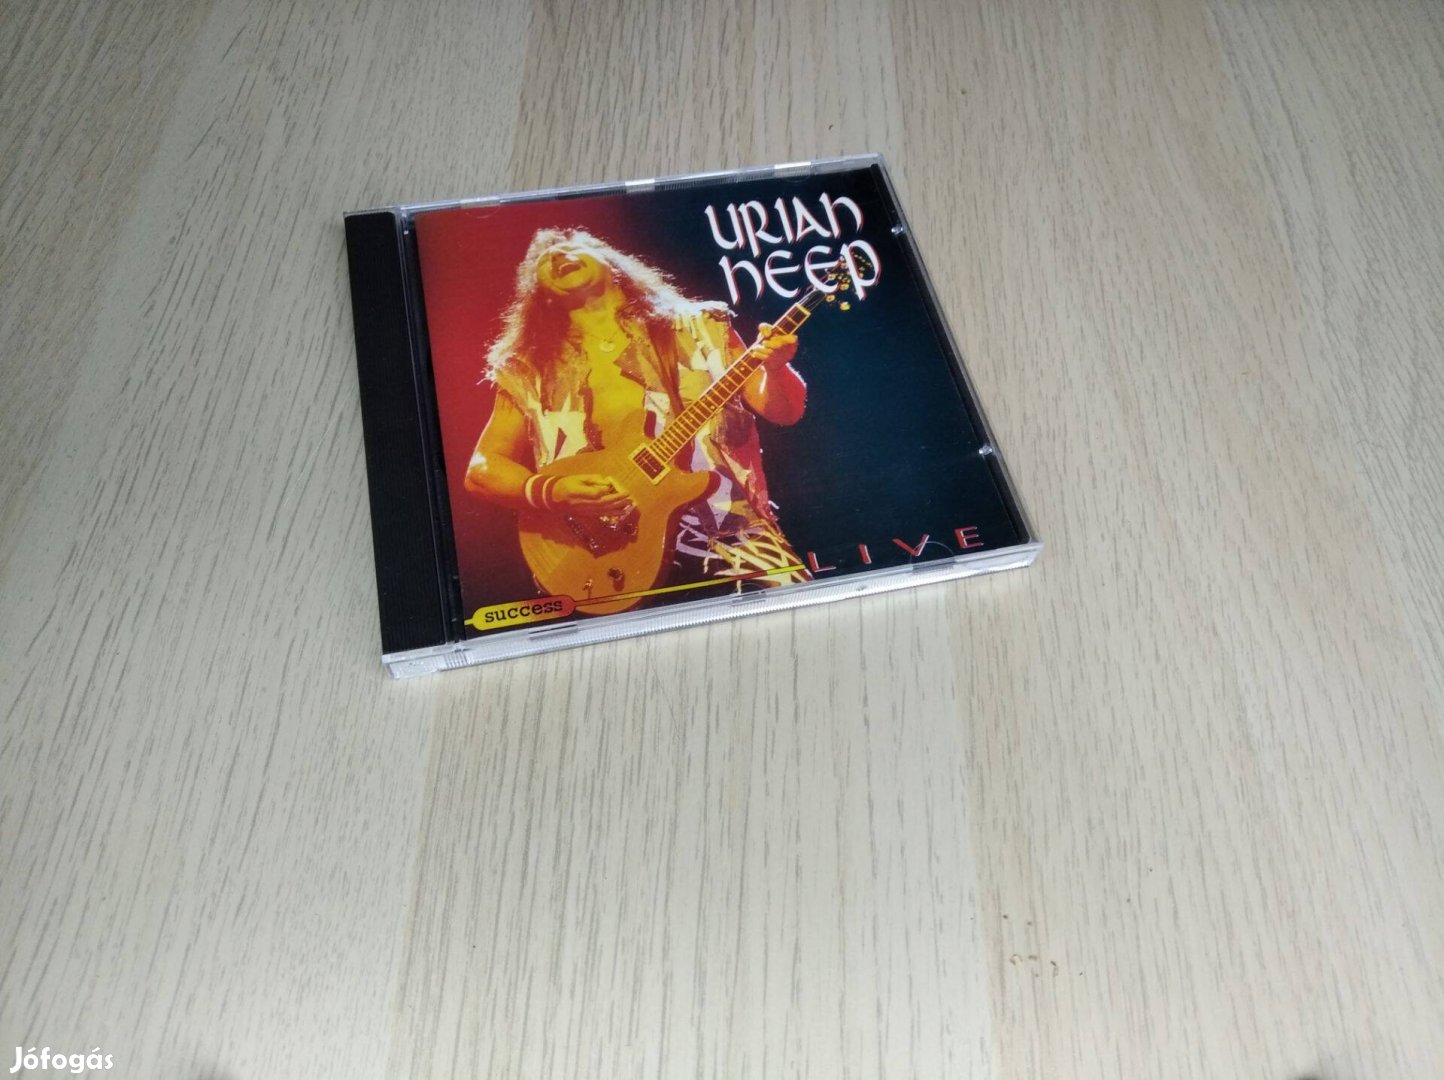 Uriah Heep - Live / CD